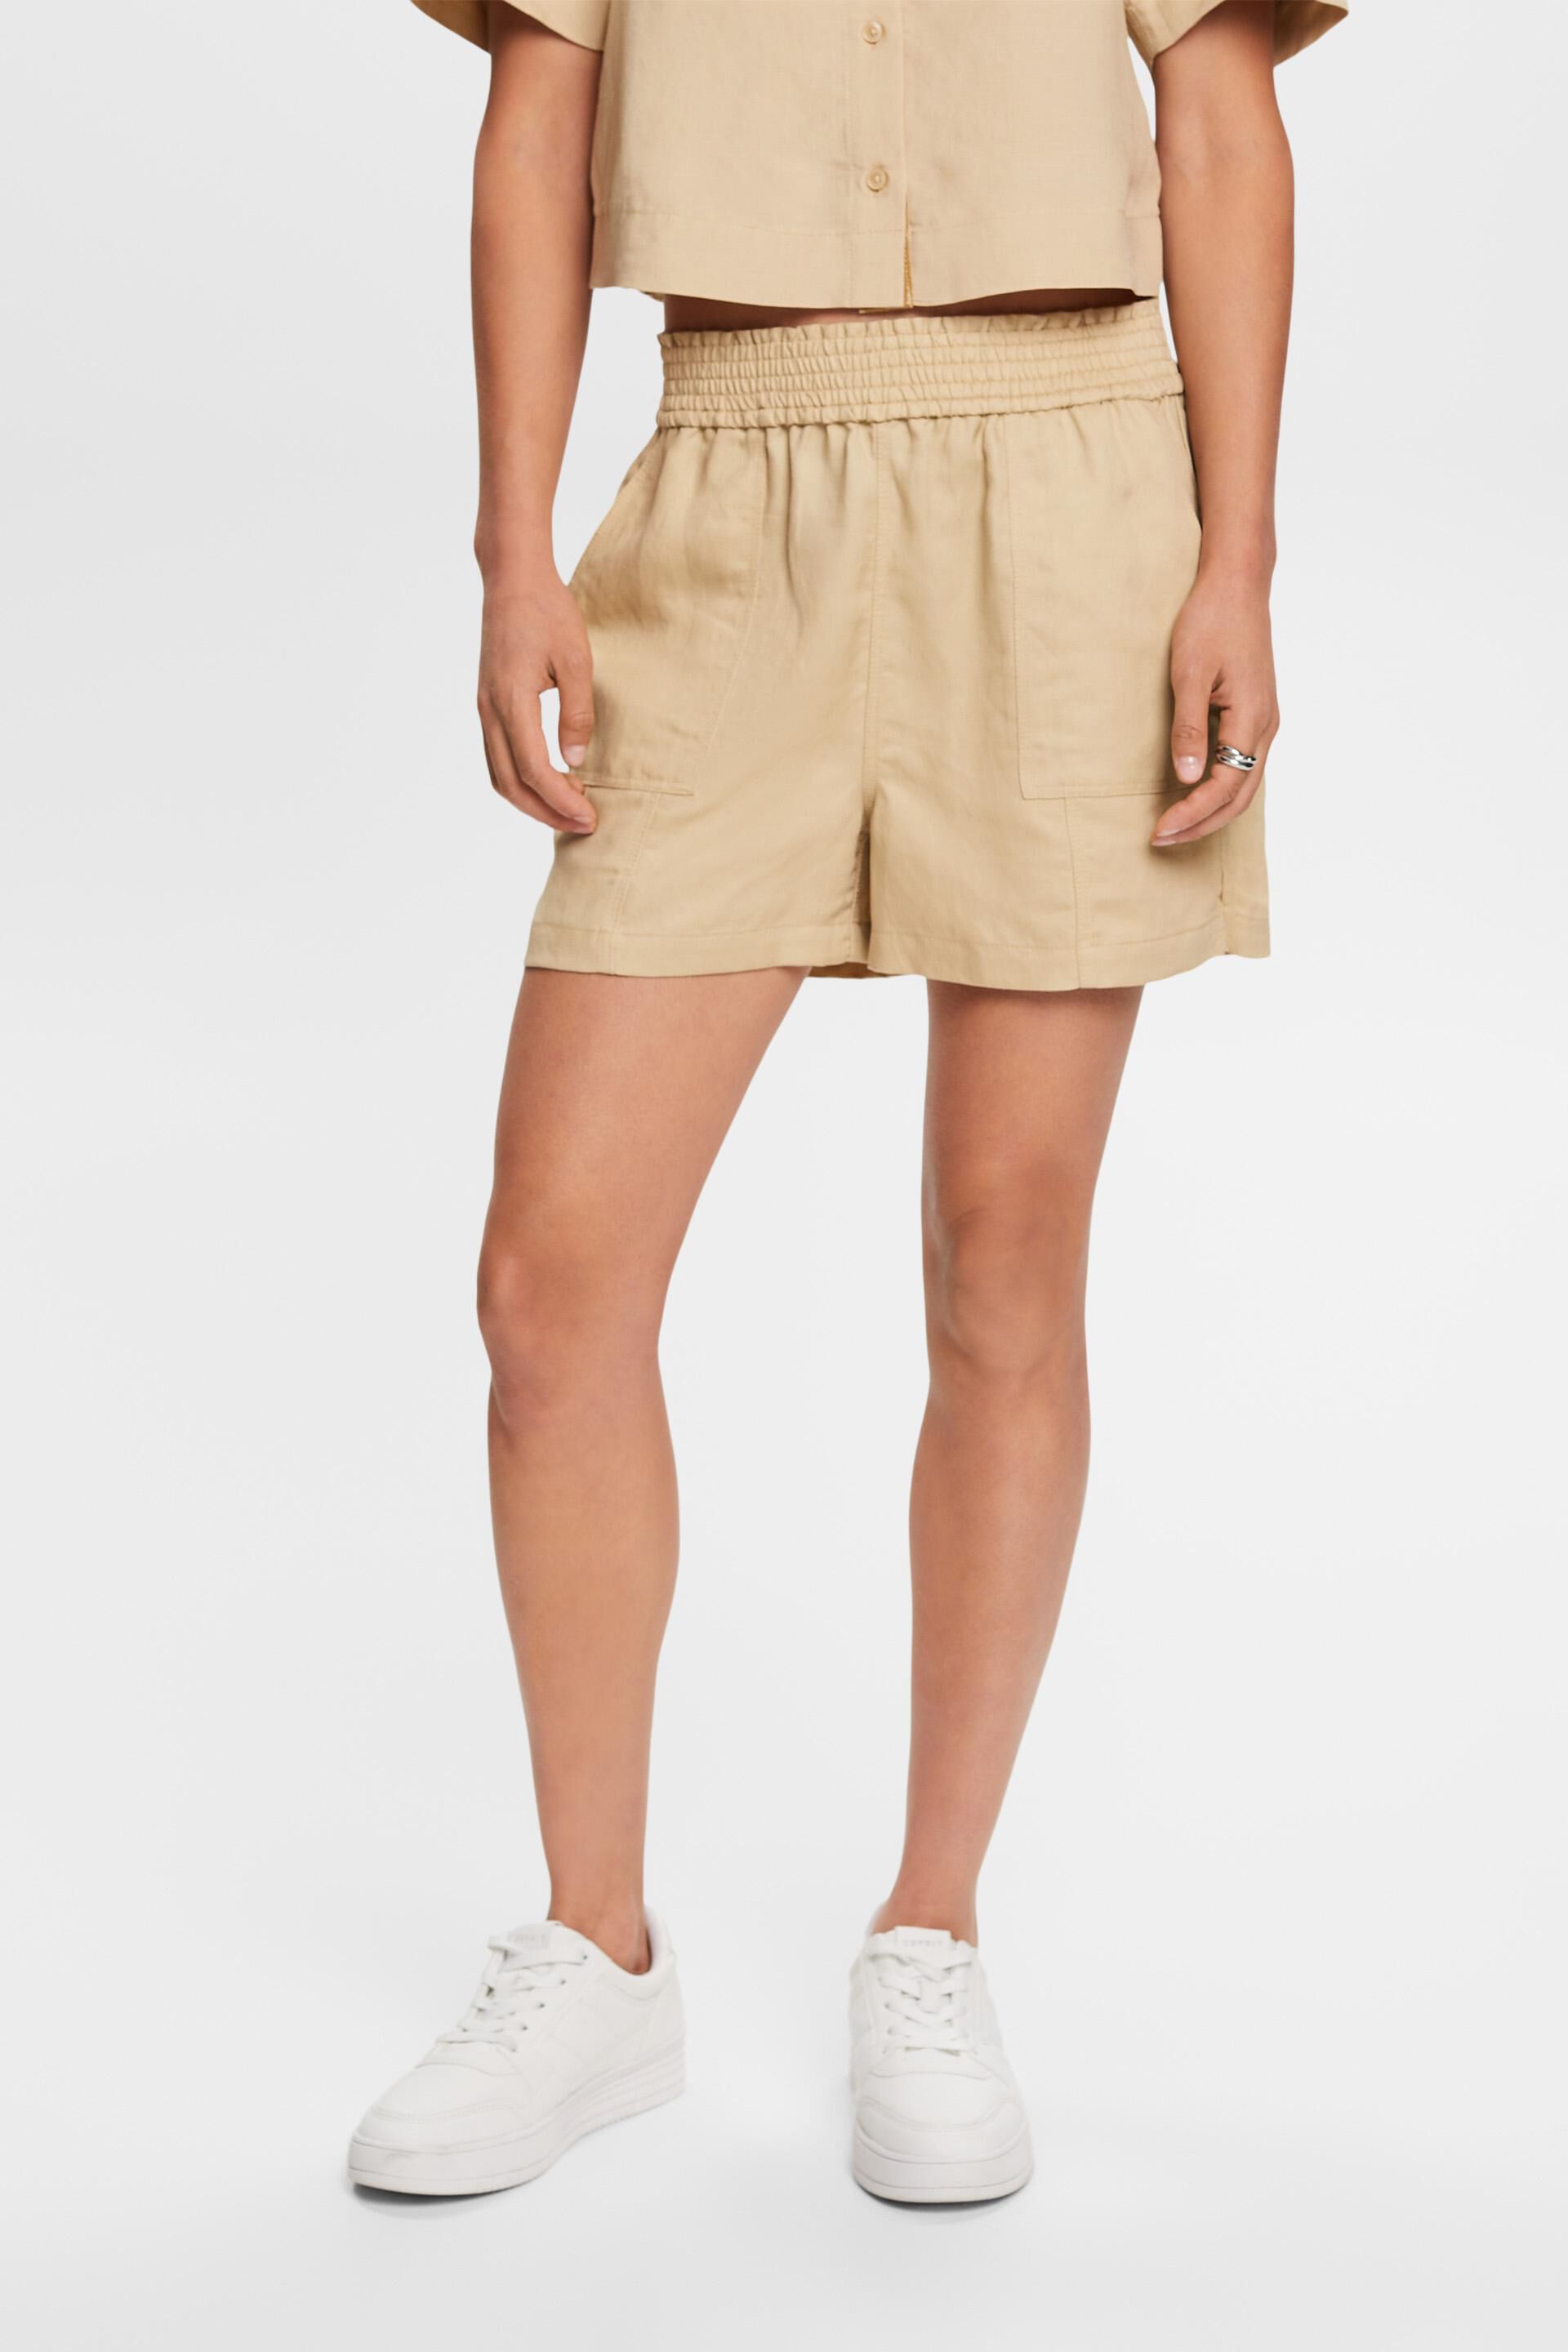 Esprit linen blend shorts, Pull-on